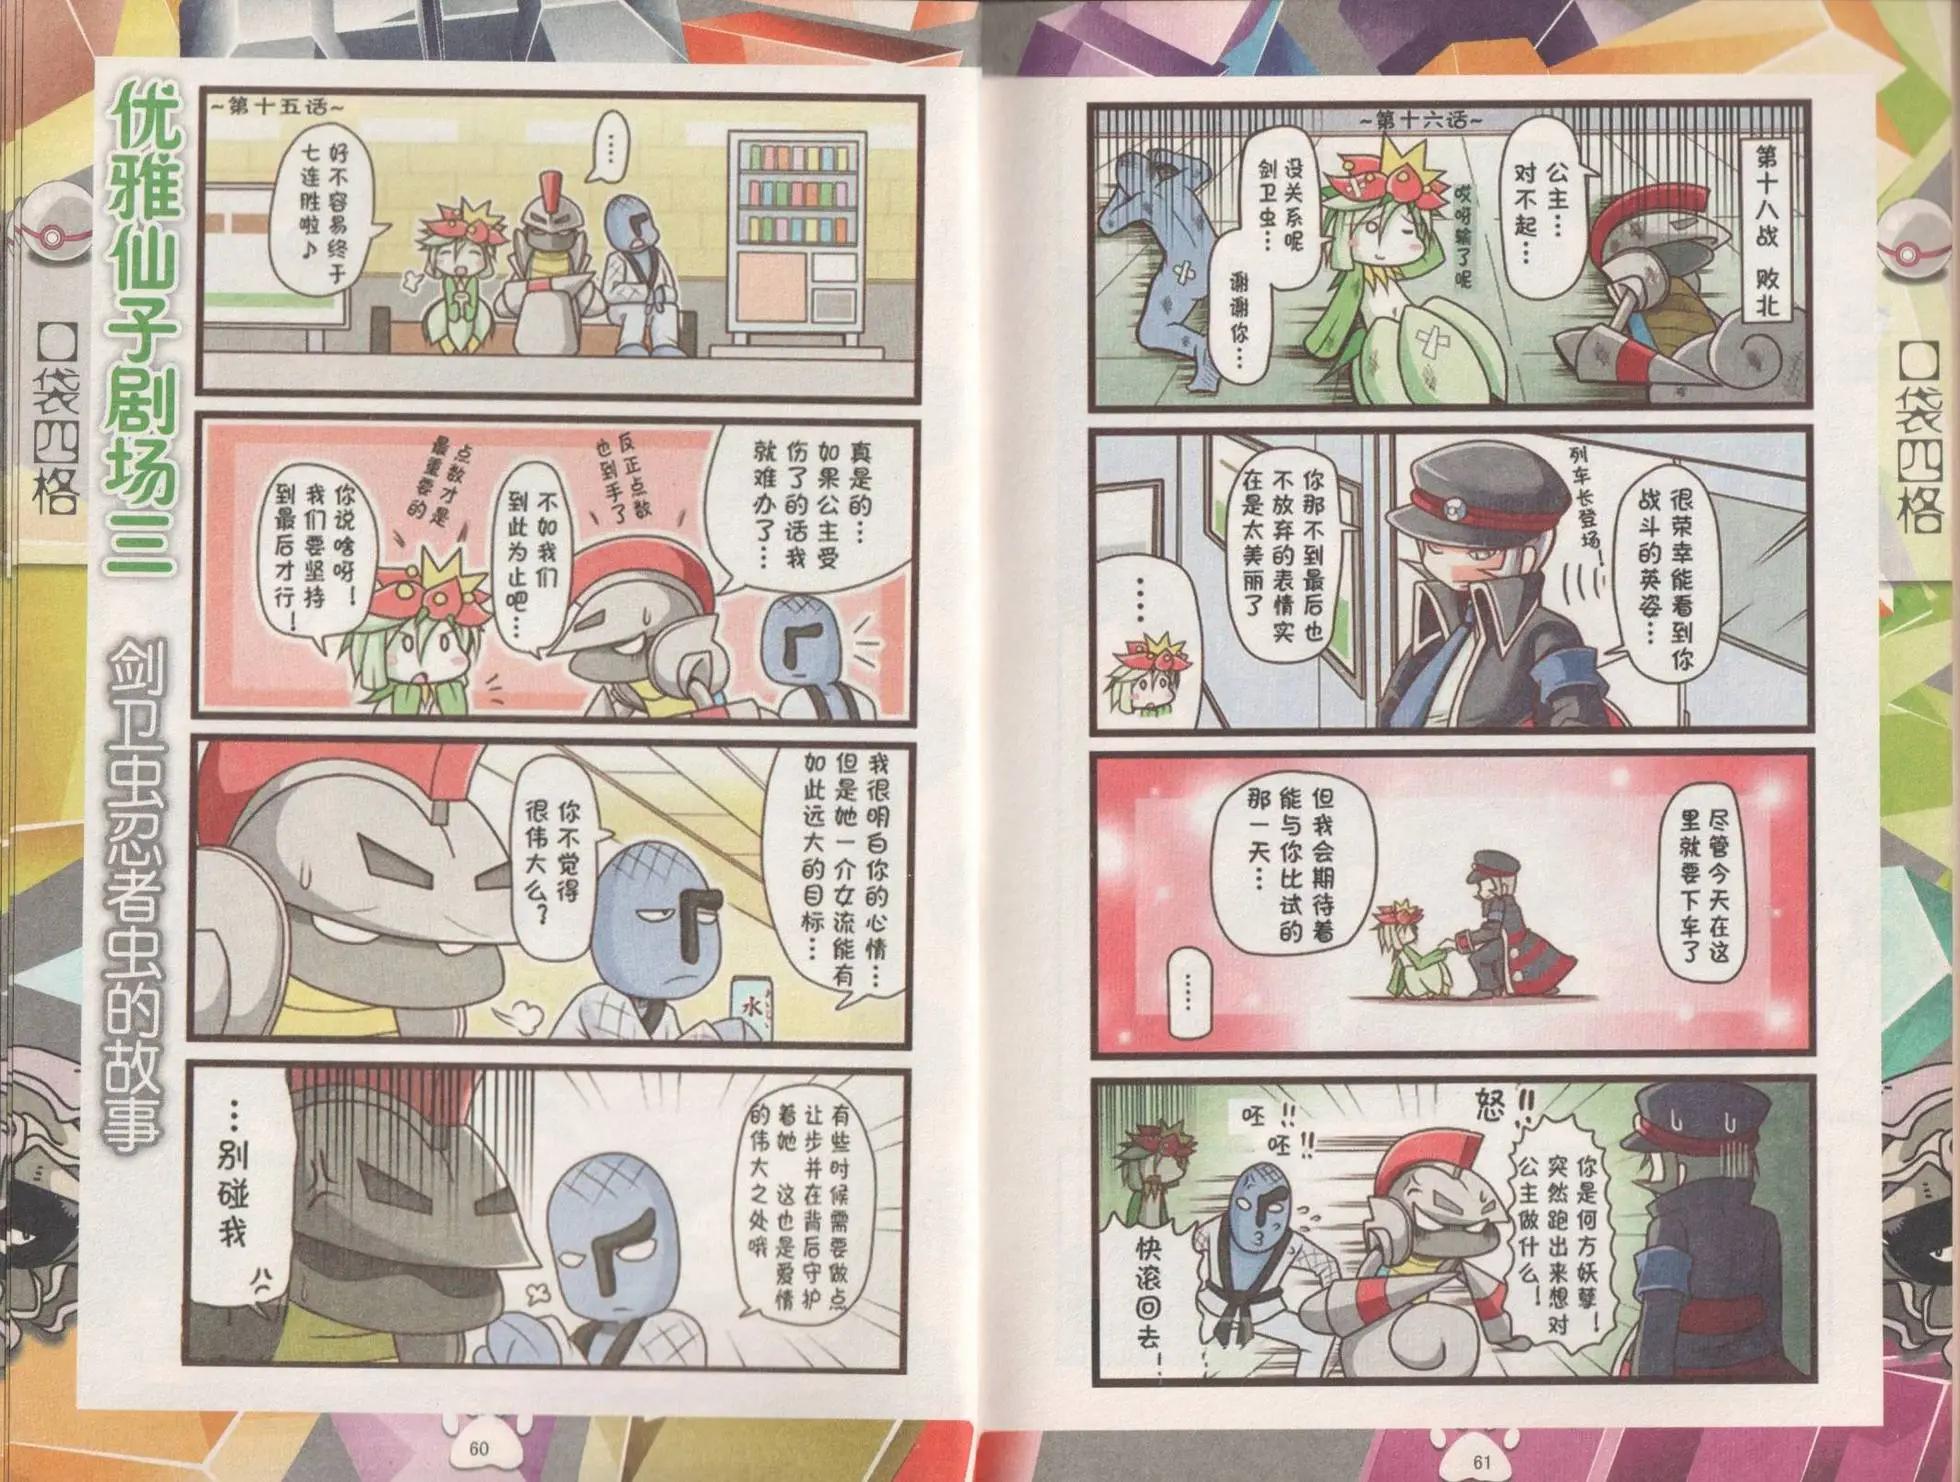 口袋迷pokemon - 第50卷(1/2) - 8